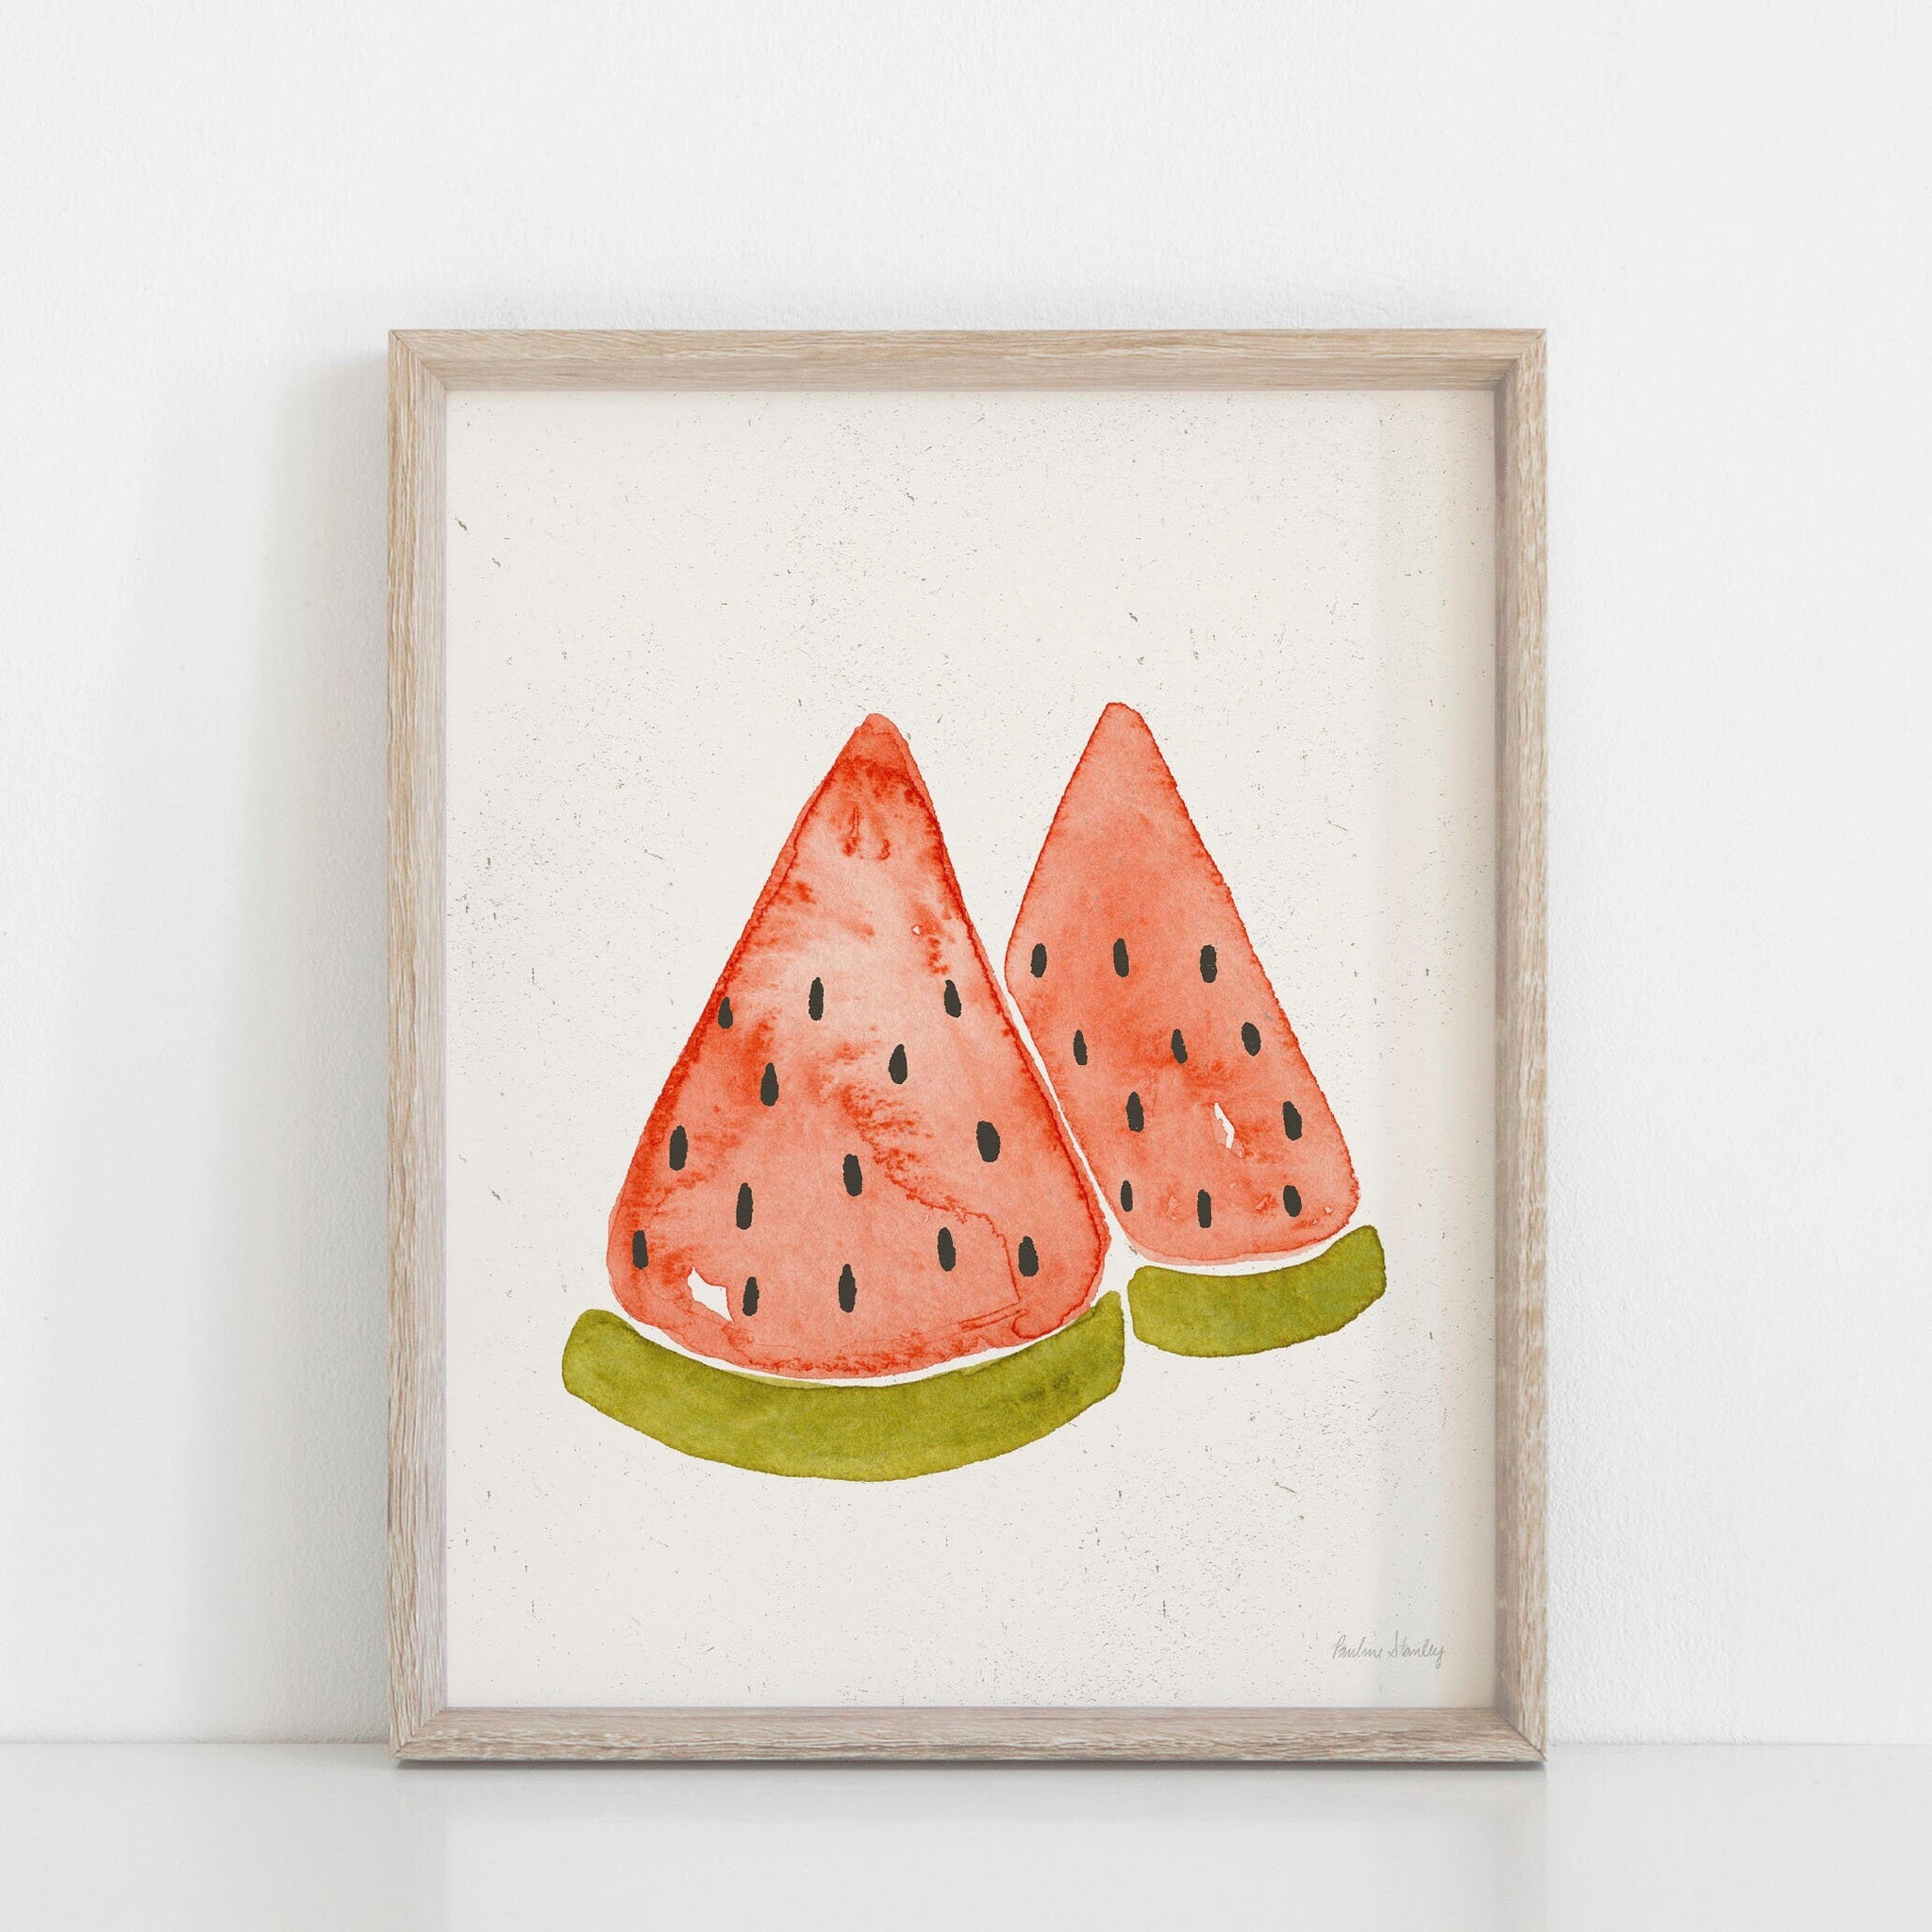 Watermelon Watercolor Wall Art Print